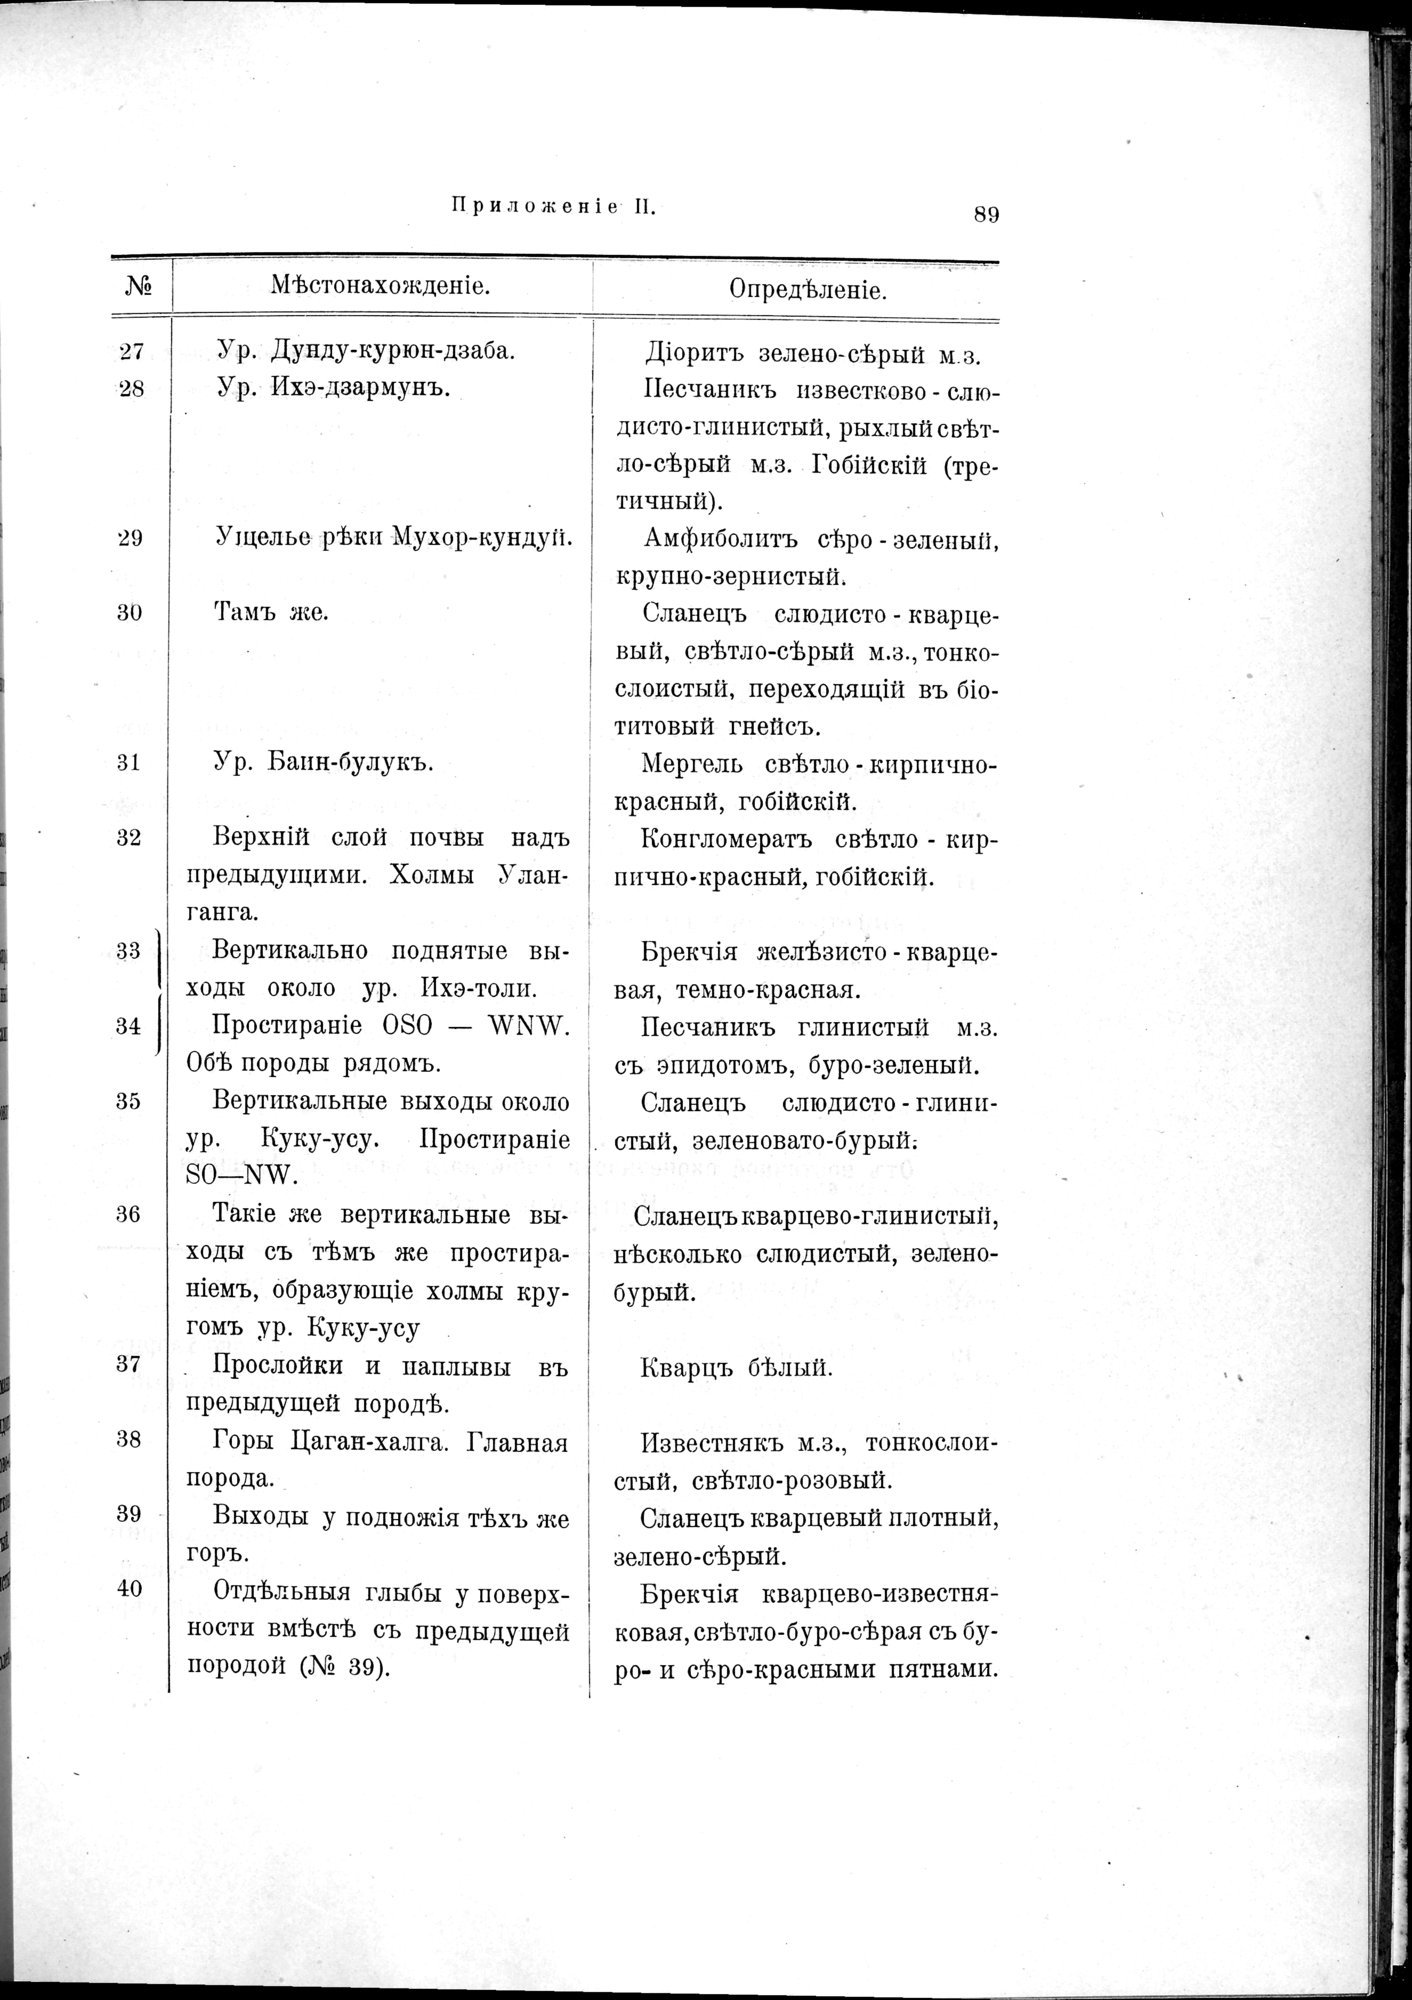 Mongoliia i Kam : vol.3 / Page 119 (Grayscale High Resolution Image)